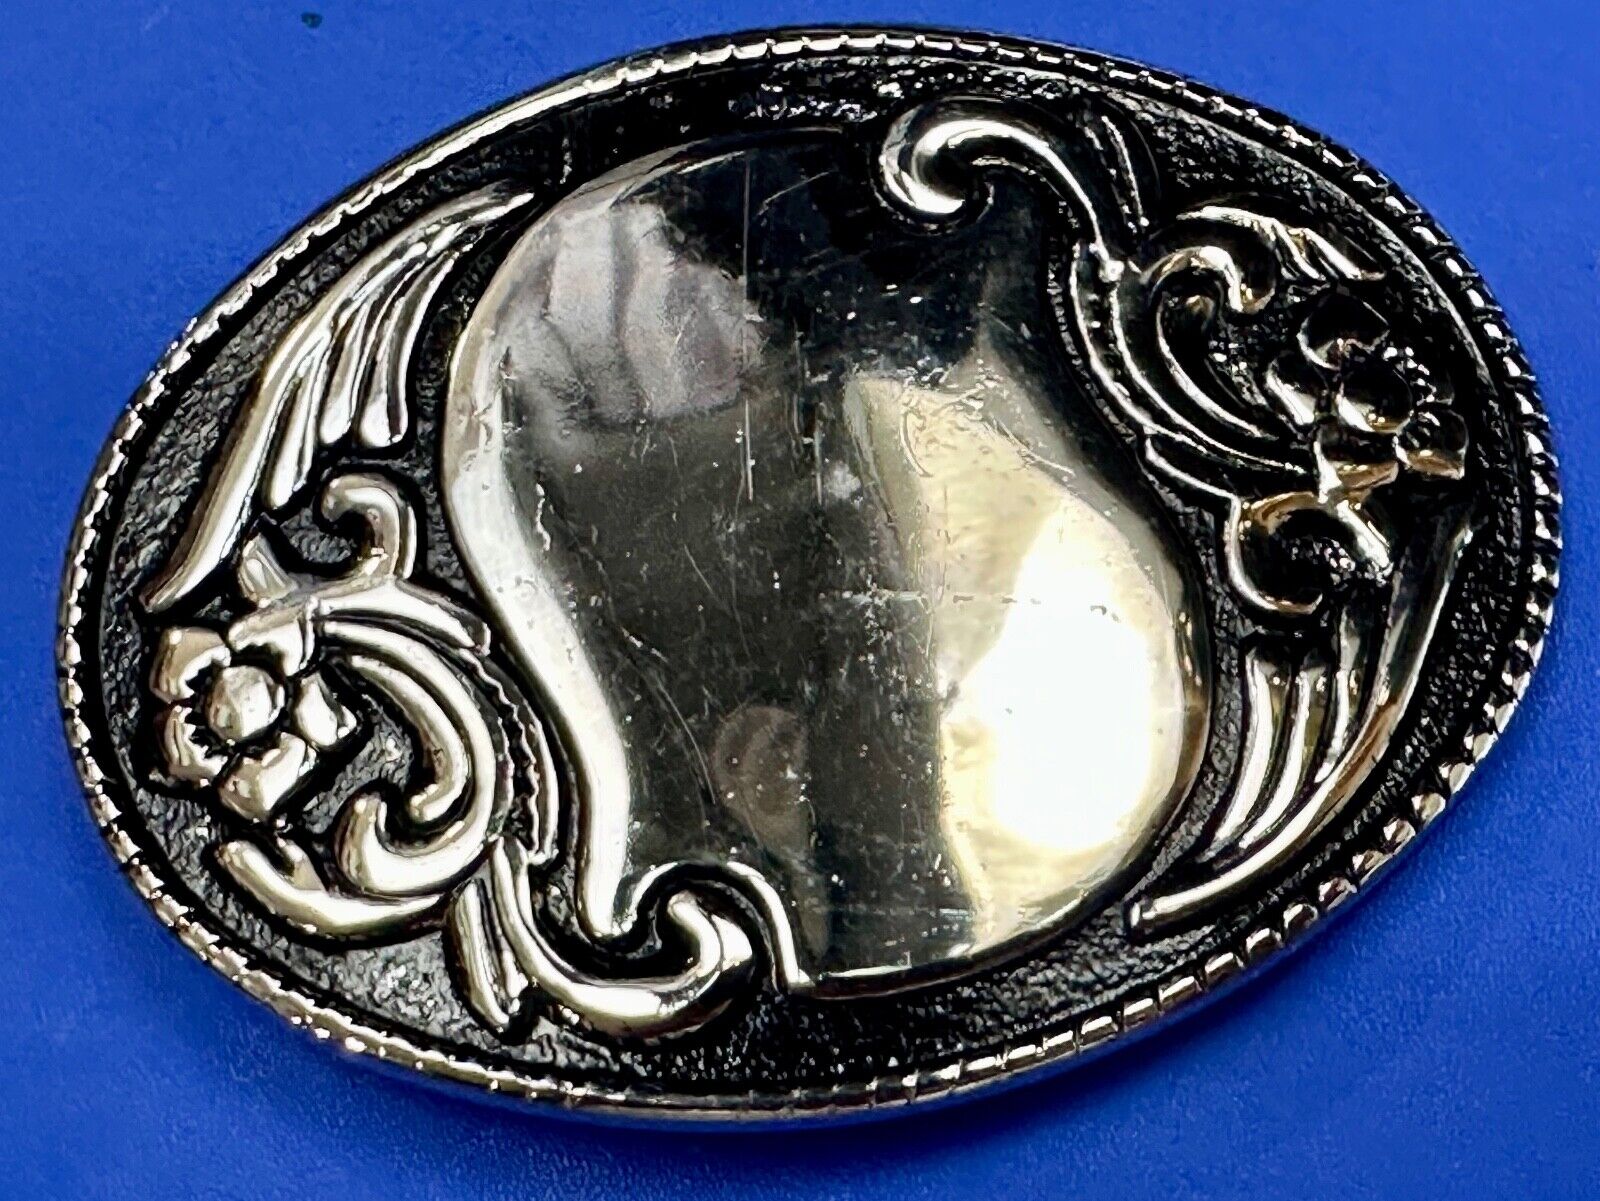 Simple vintage western flower swirl design silver tone belt buckle